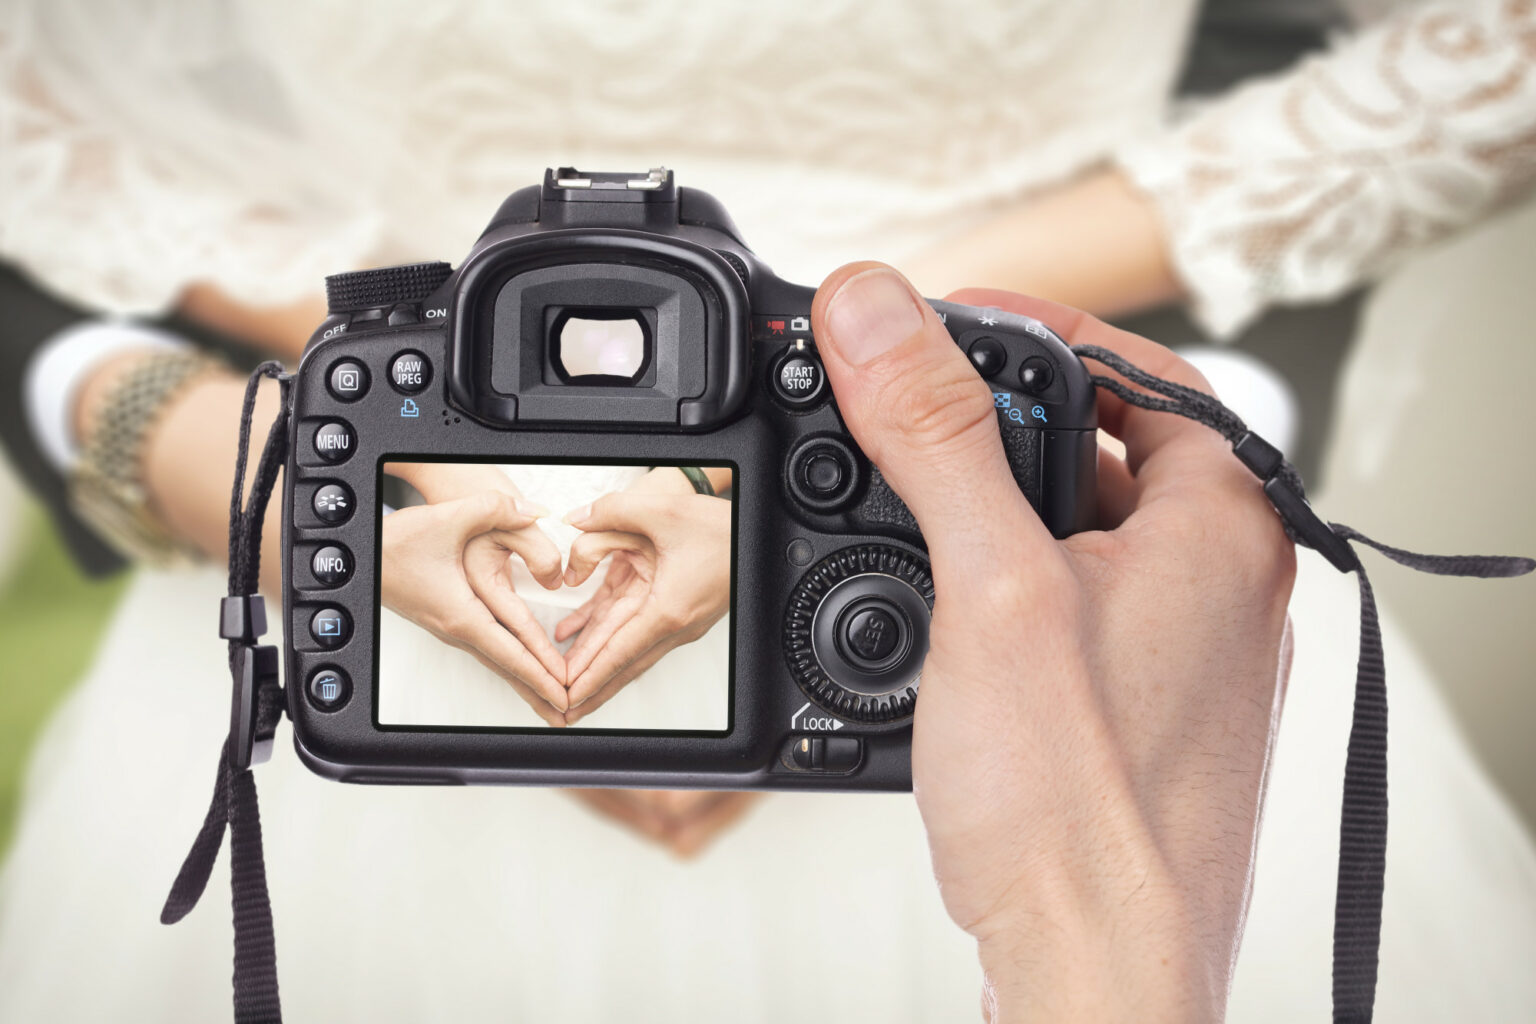 wedding-photographer